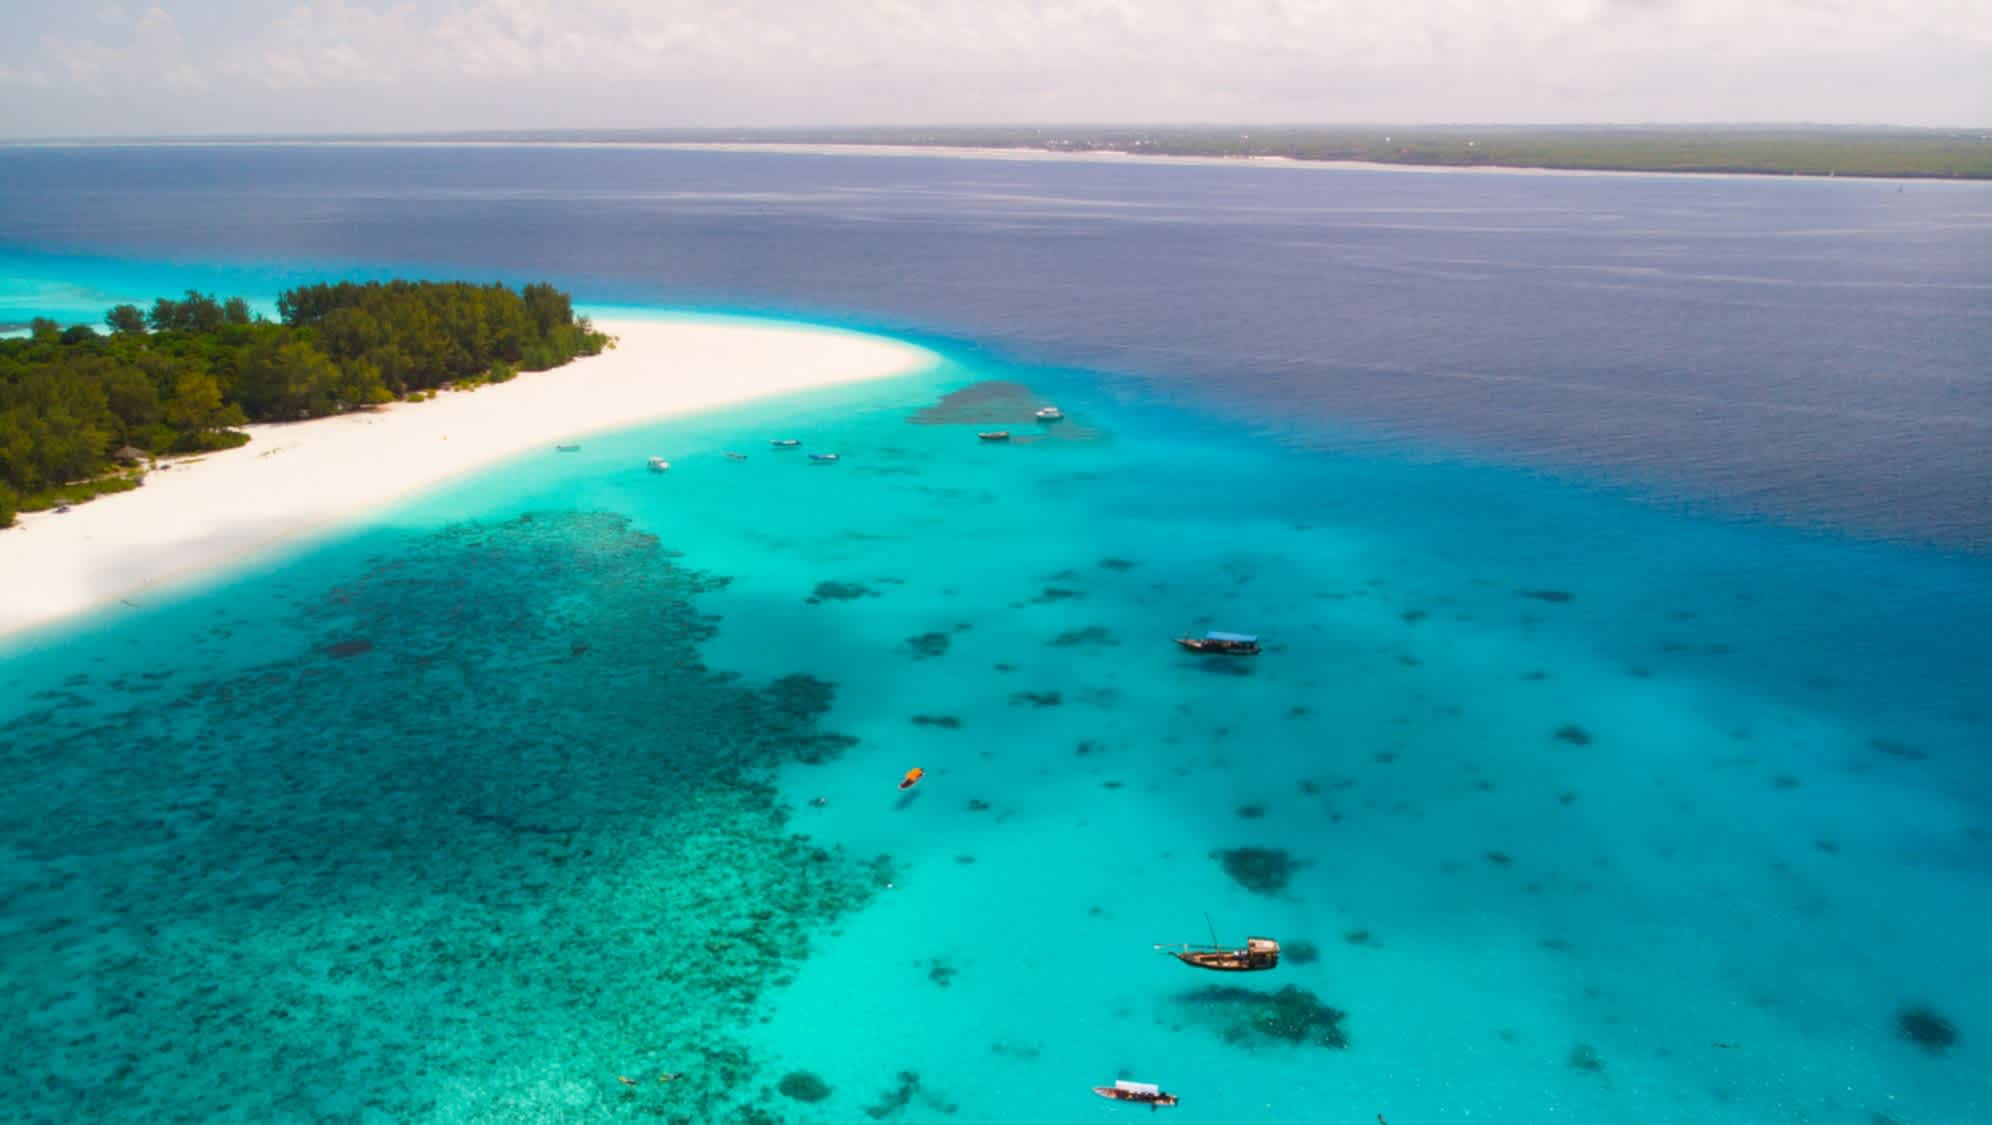 L'atoll de Mnemba sur la côte est de Zanzibar, Tanzanie

